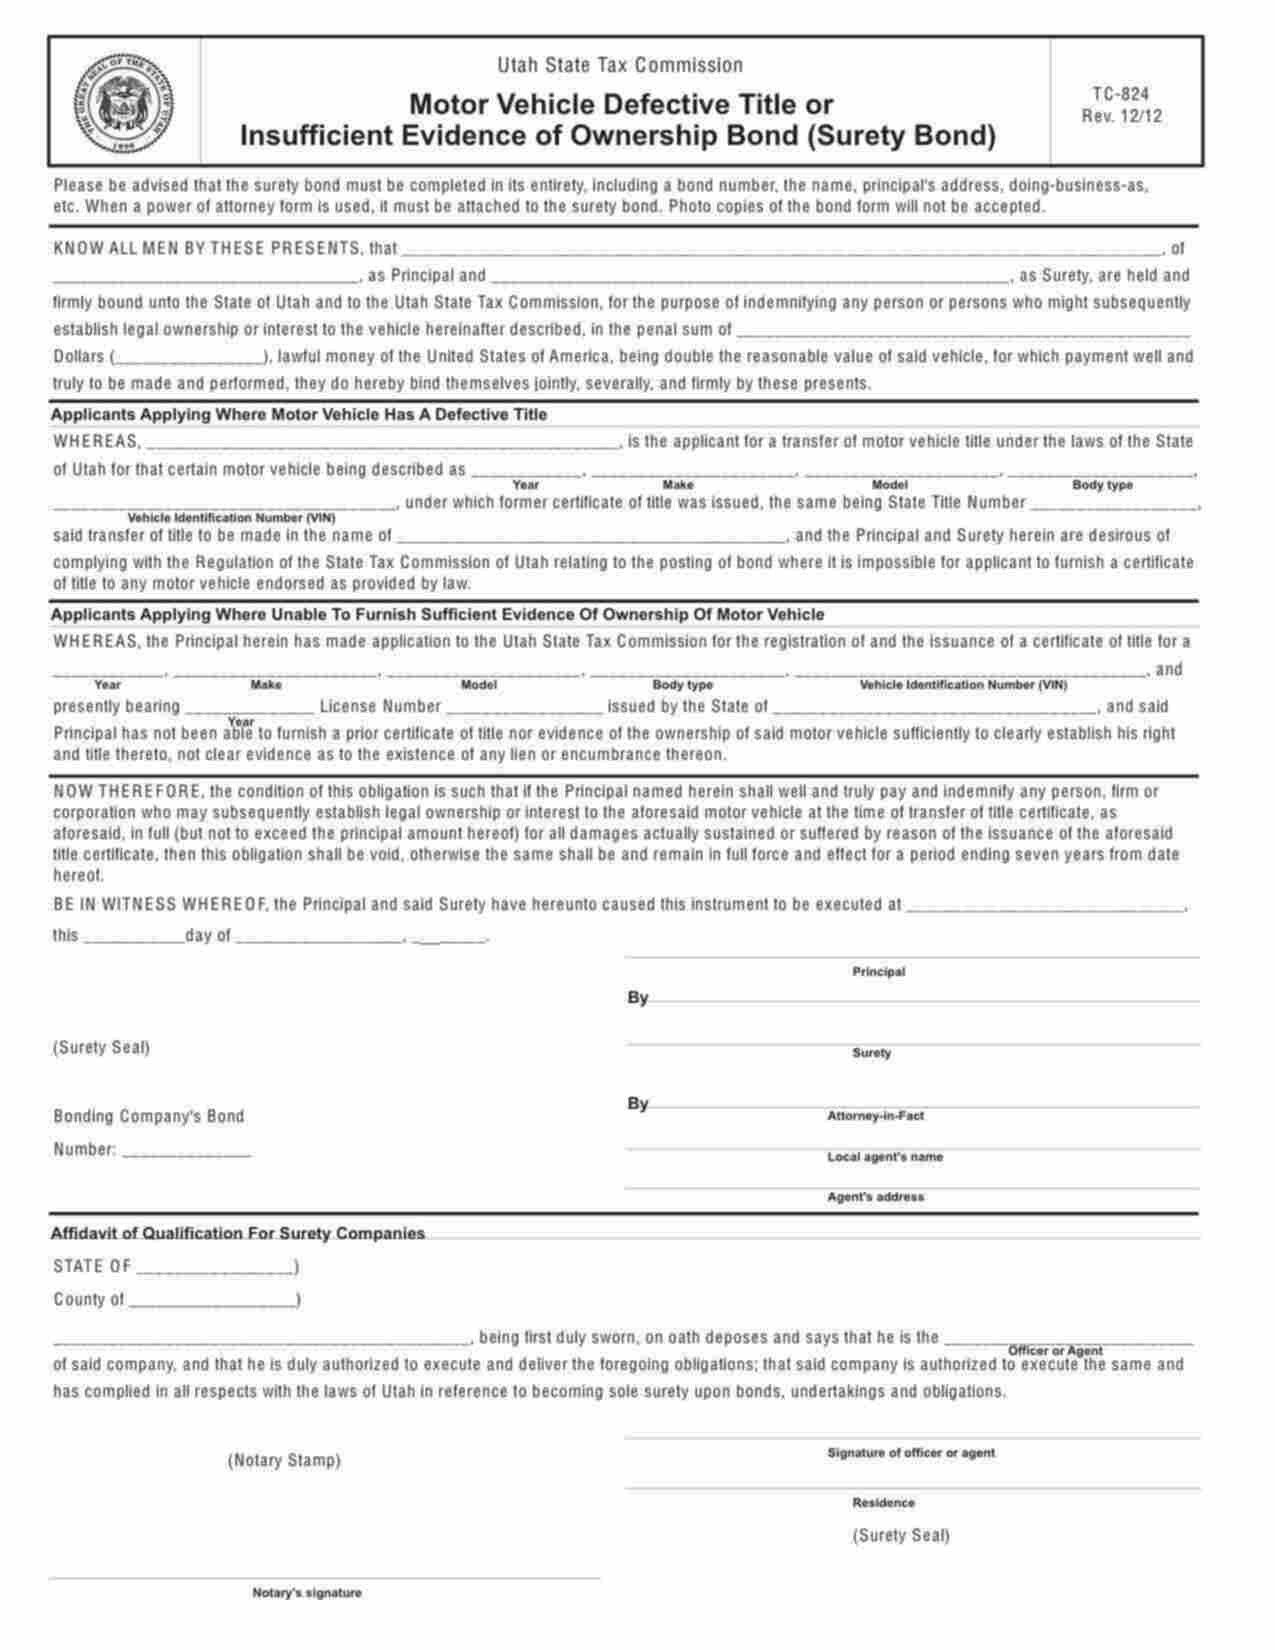 Utah Motor Vehicle Defective Title Bond Form